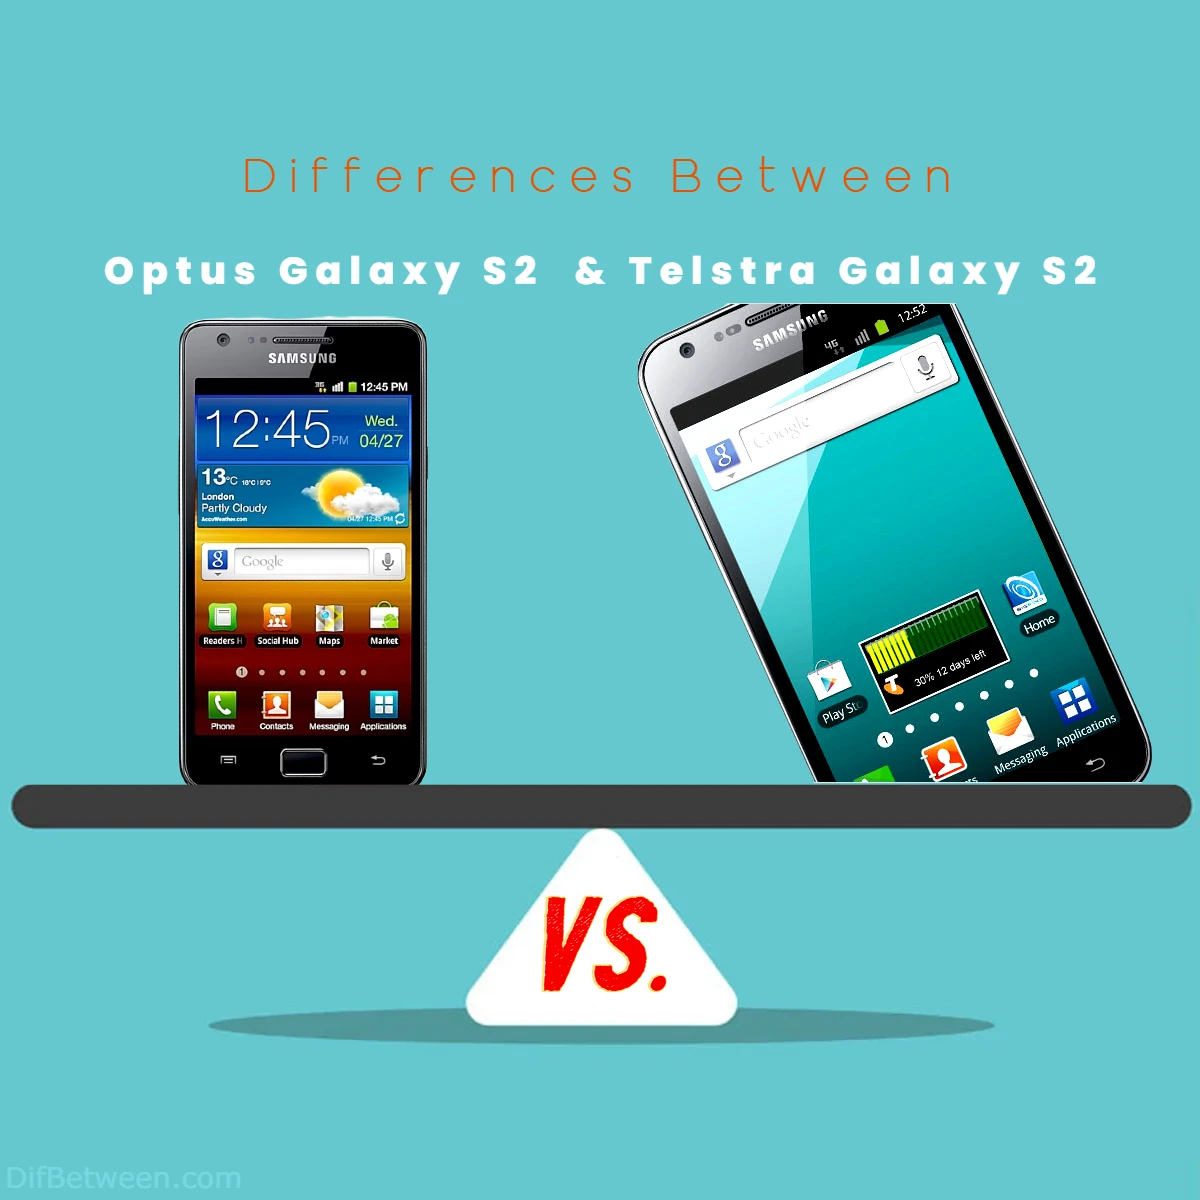 Differences Between Optus Galaxy S2 (Galaxy S II) vs Telstra Galaxy S2